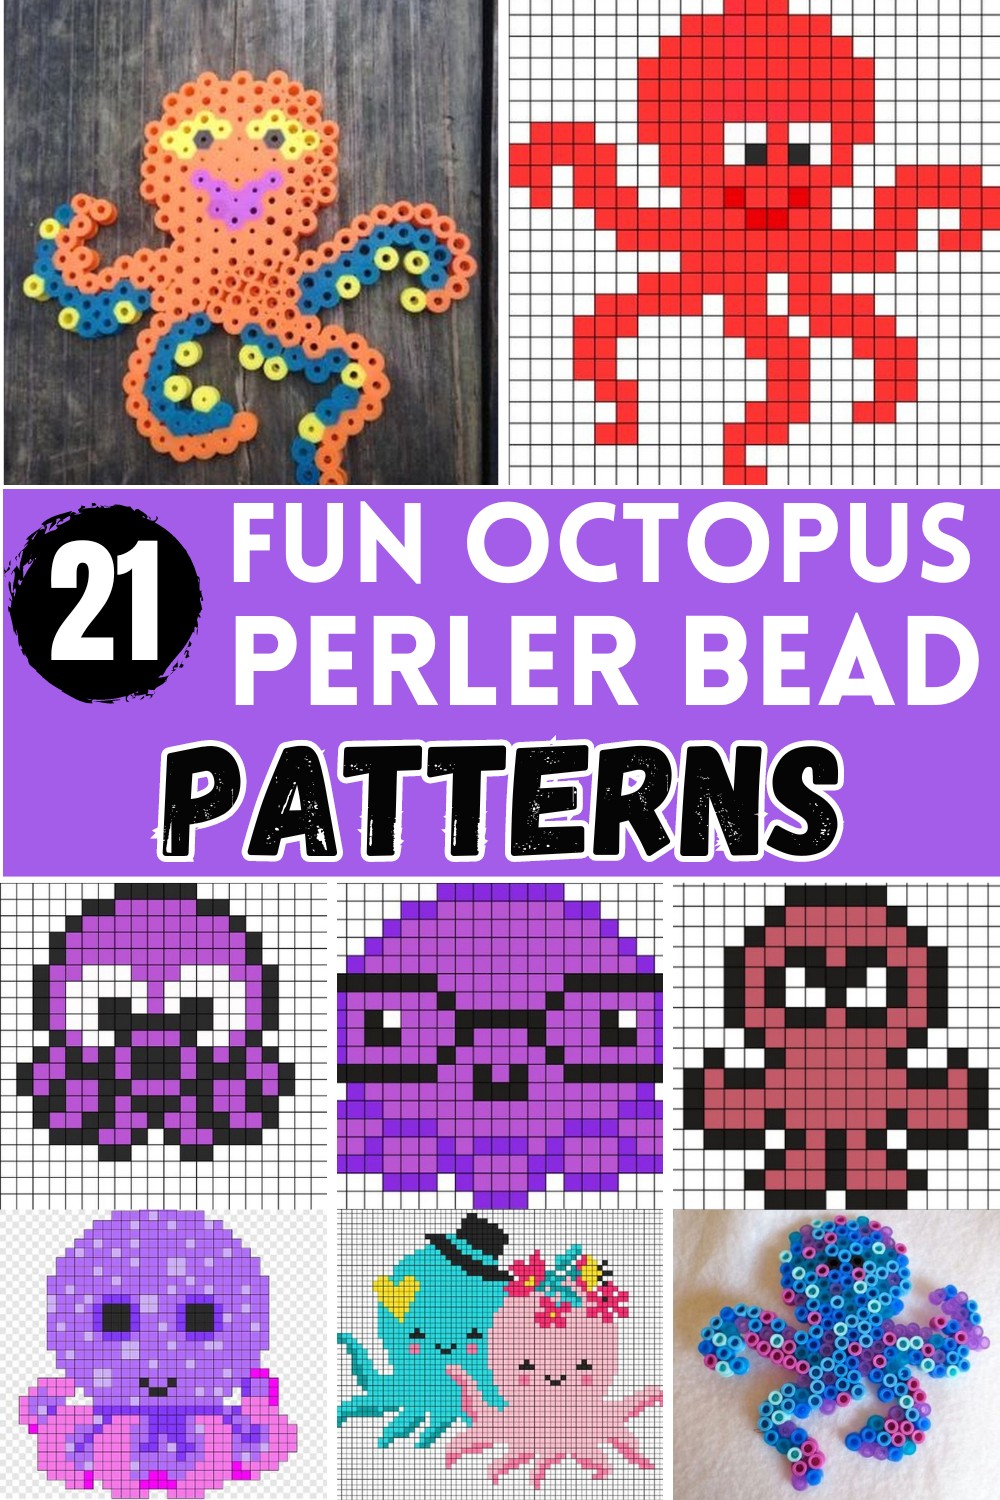 Fun Octopus Perler Bead Patterns